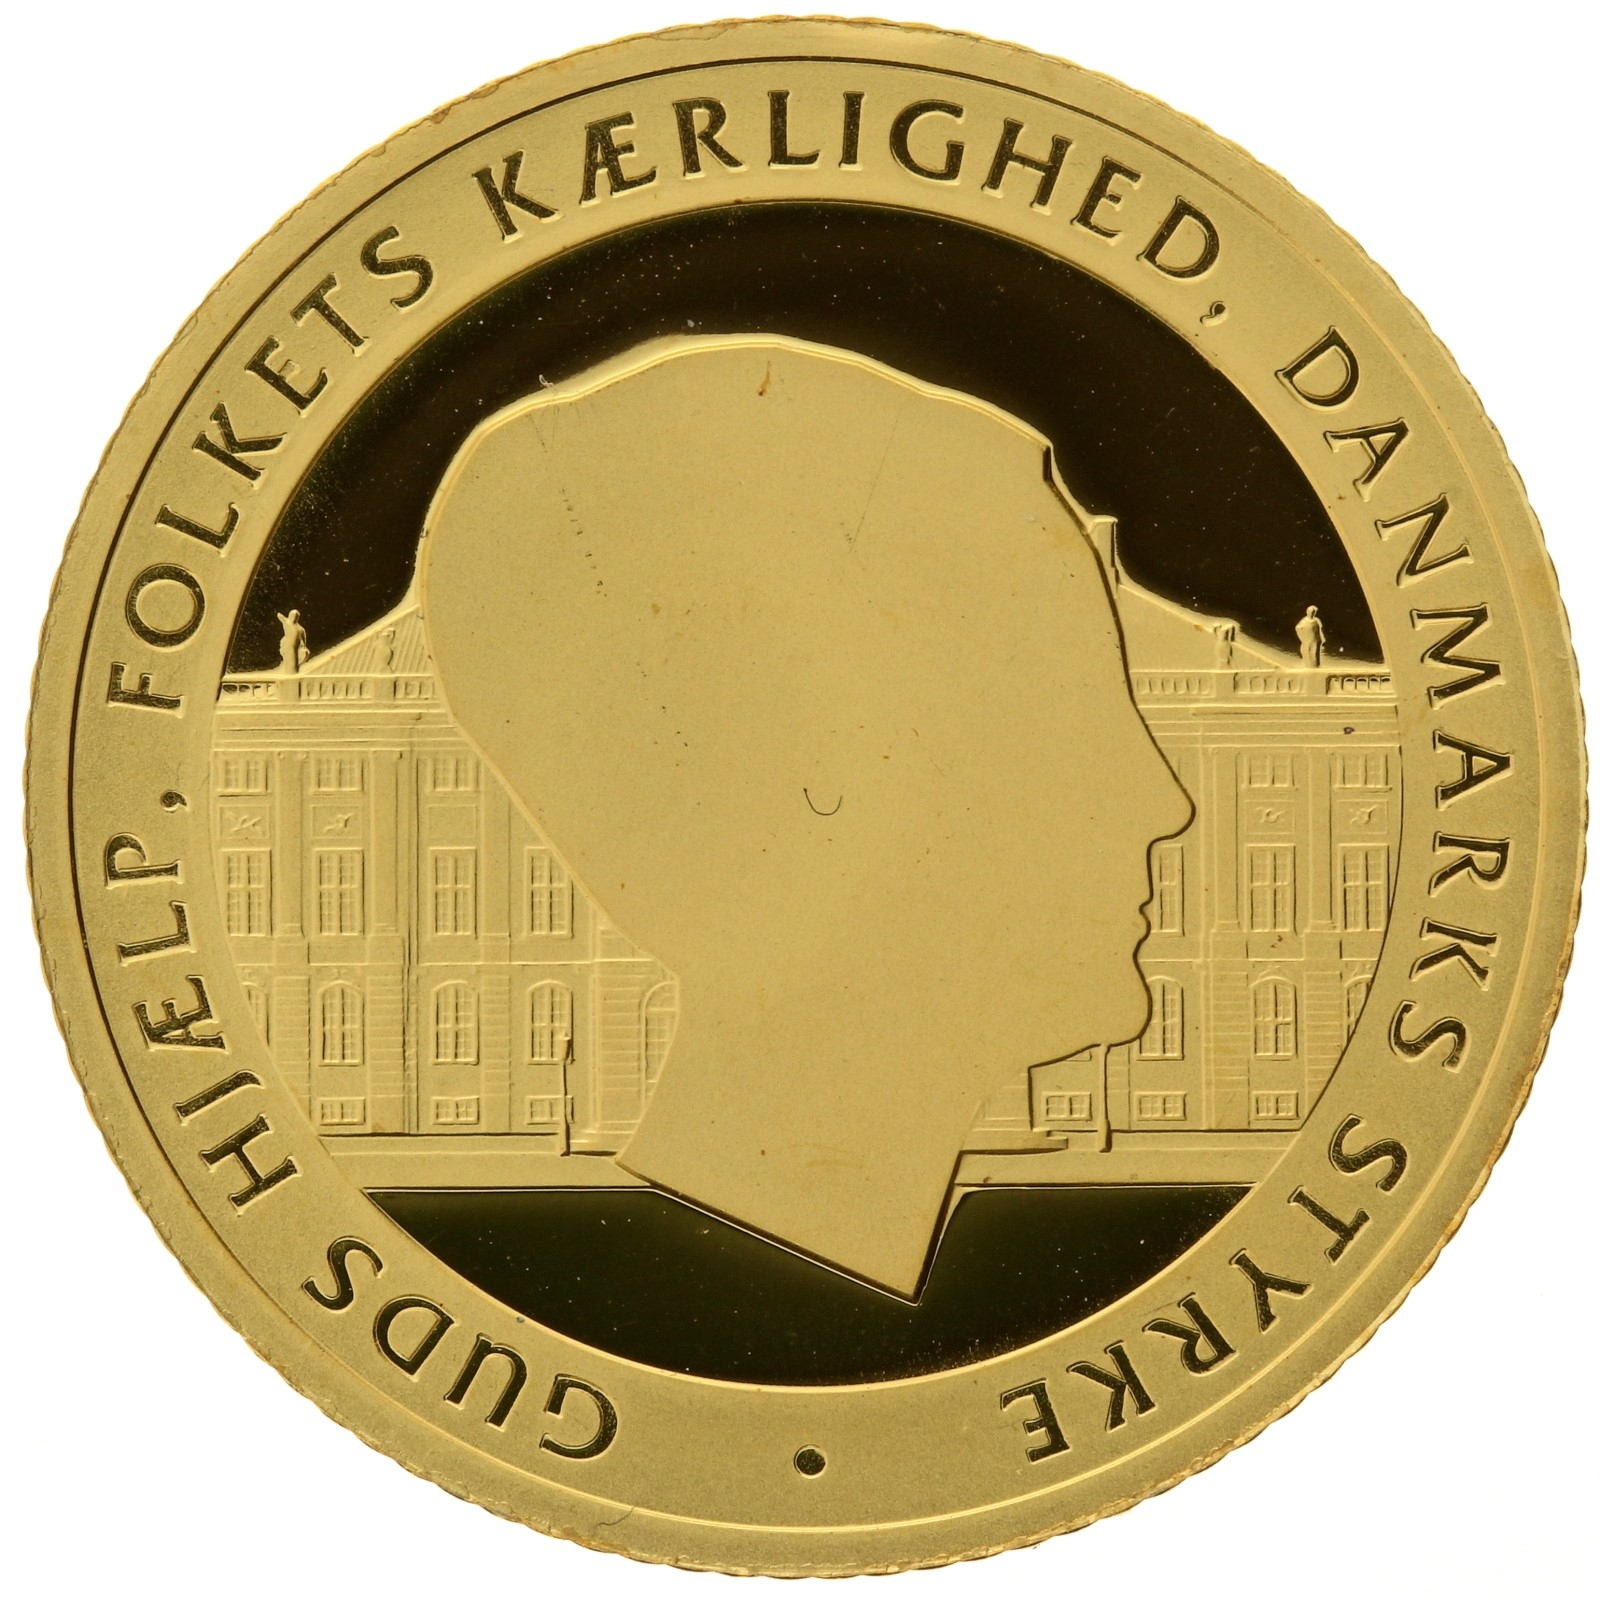 Denmark - 2012 - Queen Margrethe II's 40th anniversary - medal